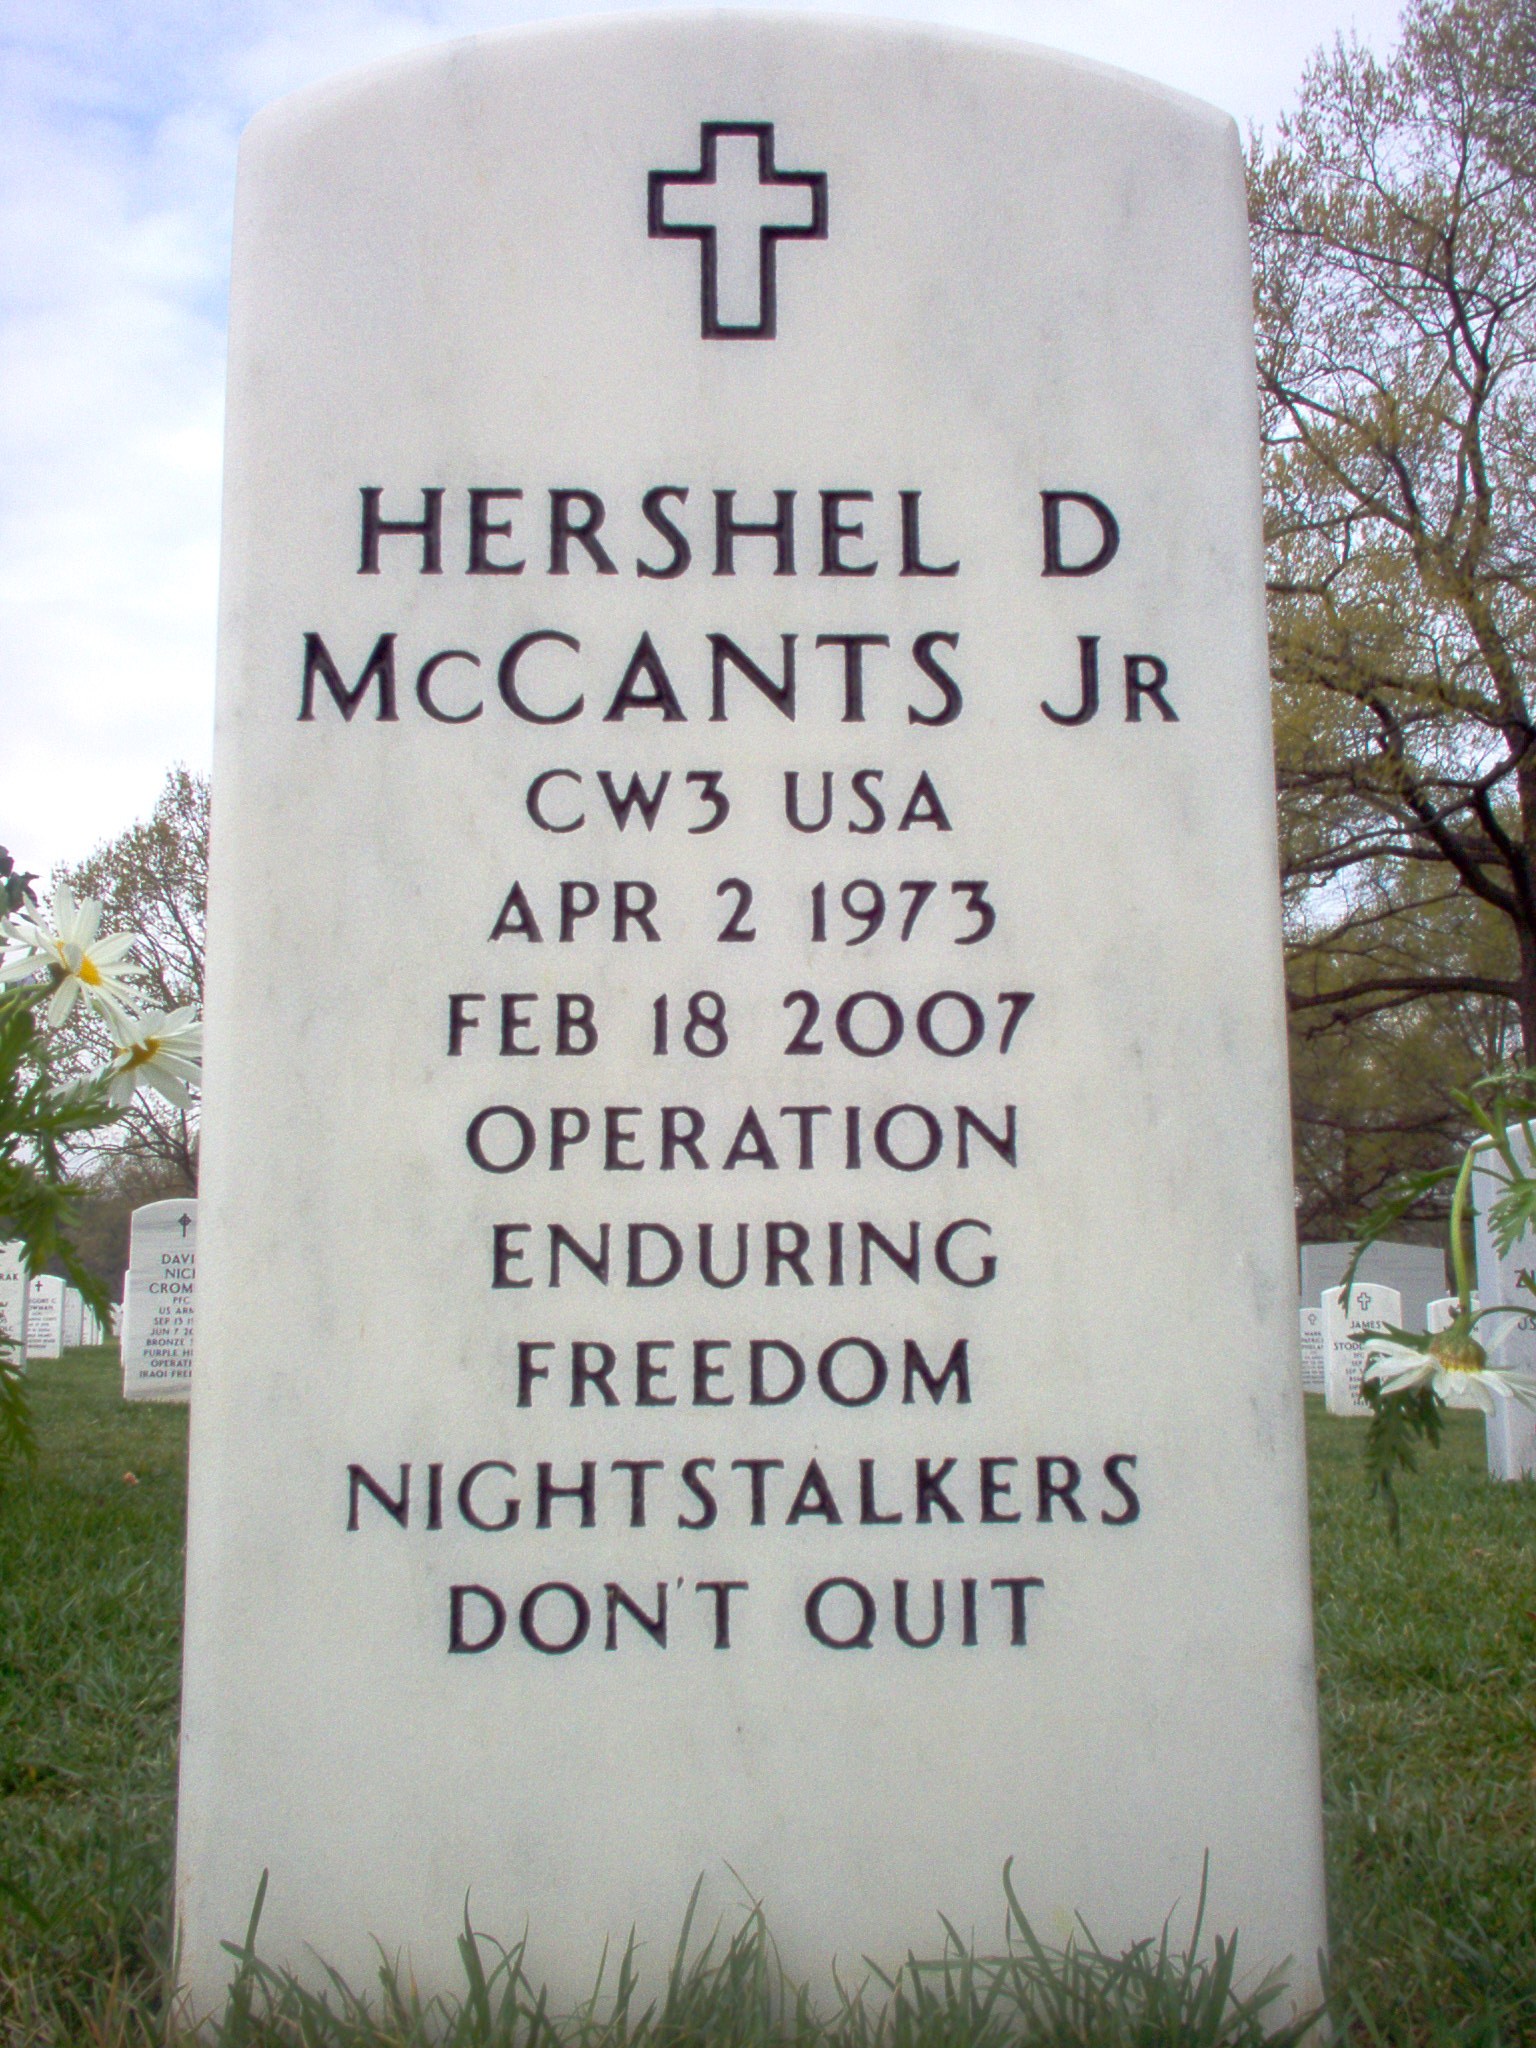 hdmccantsjr-gravesite-photo-april-2007-002